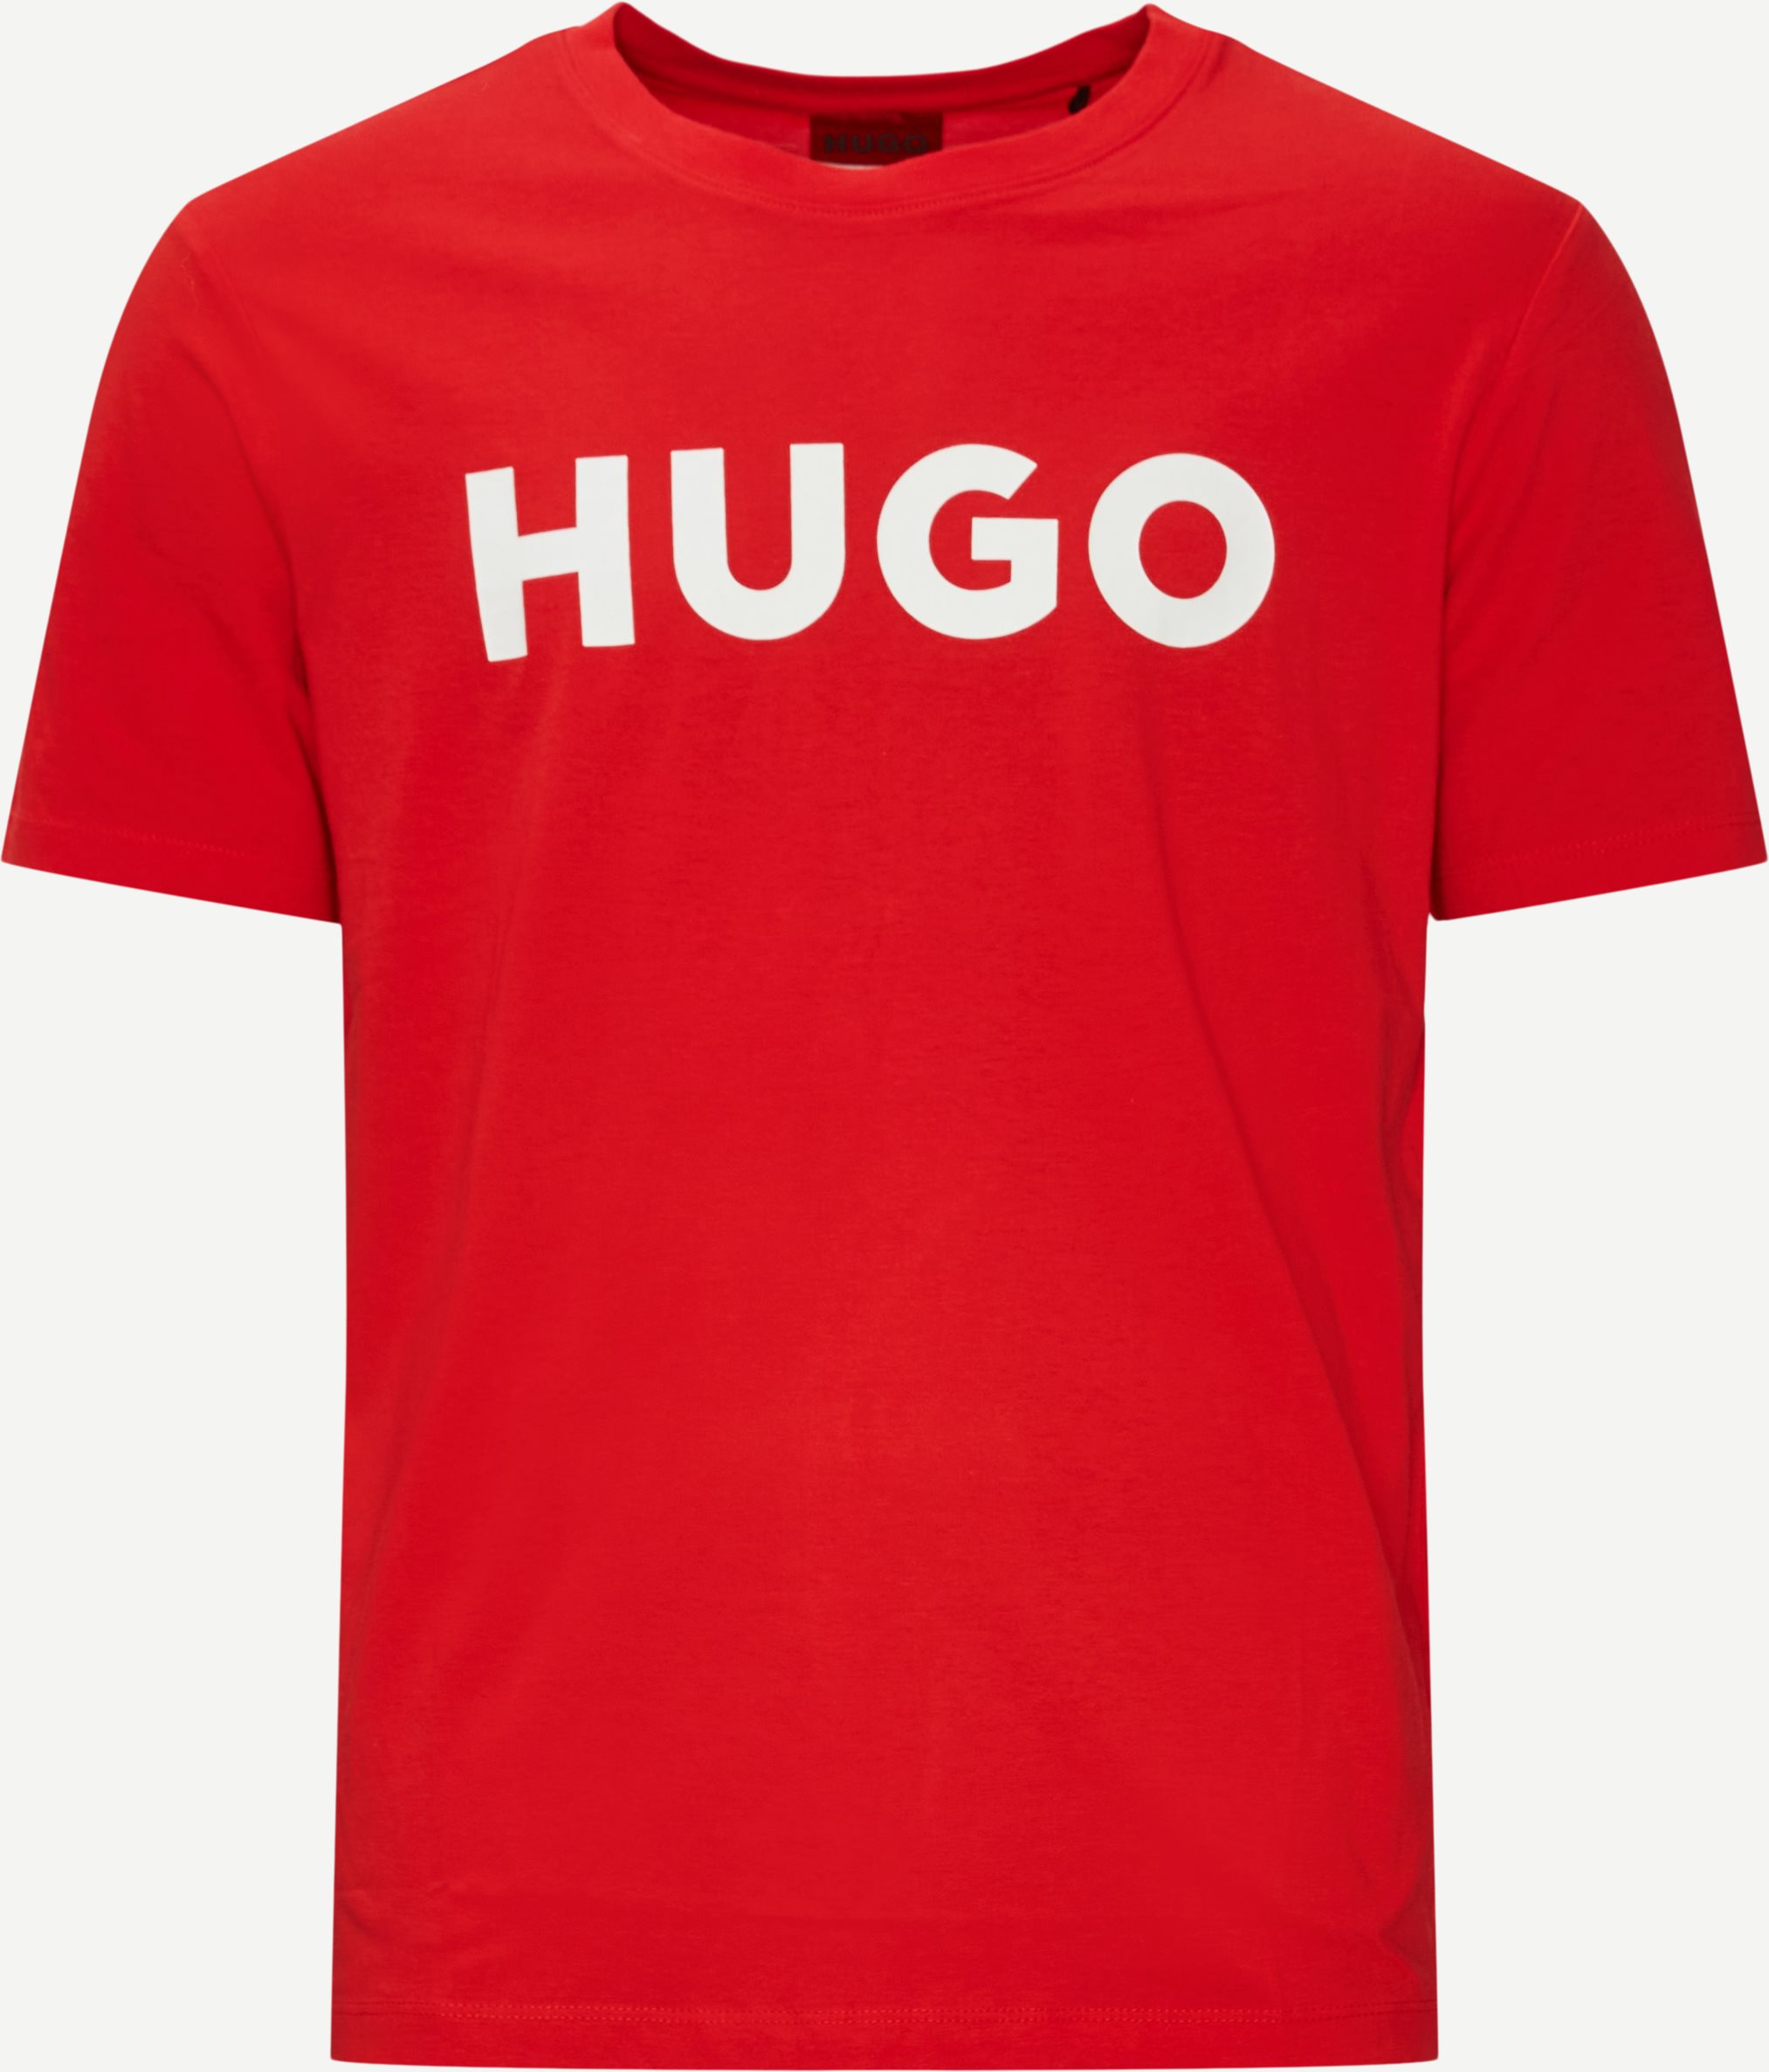 Dulivio T-shirt - T-shirts - Regular fit - Red